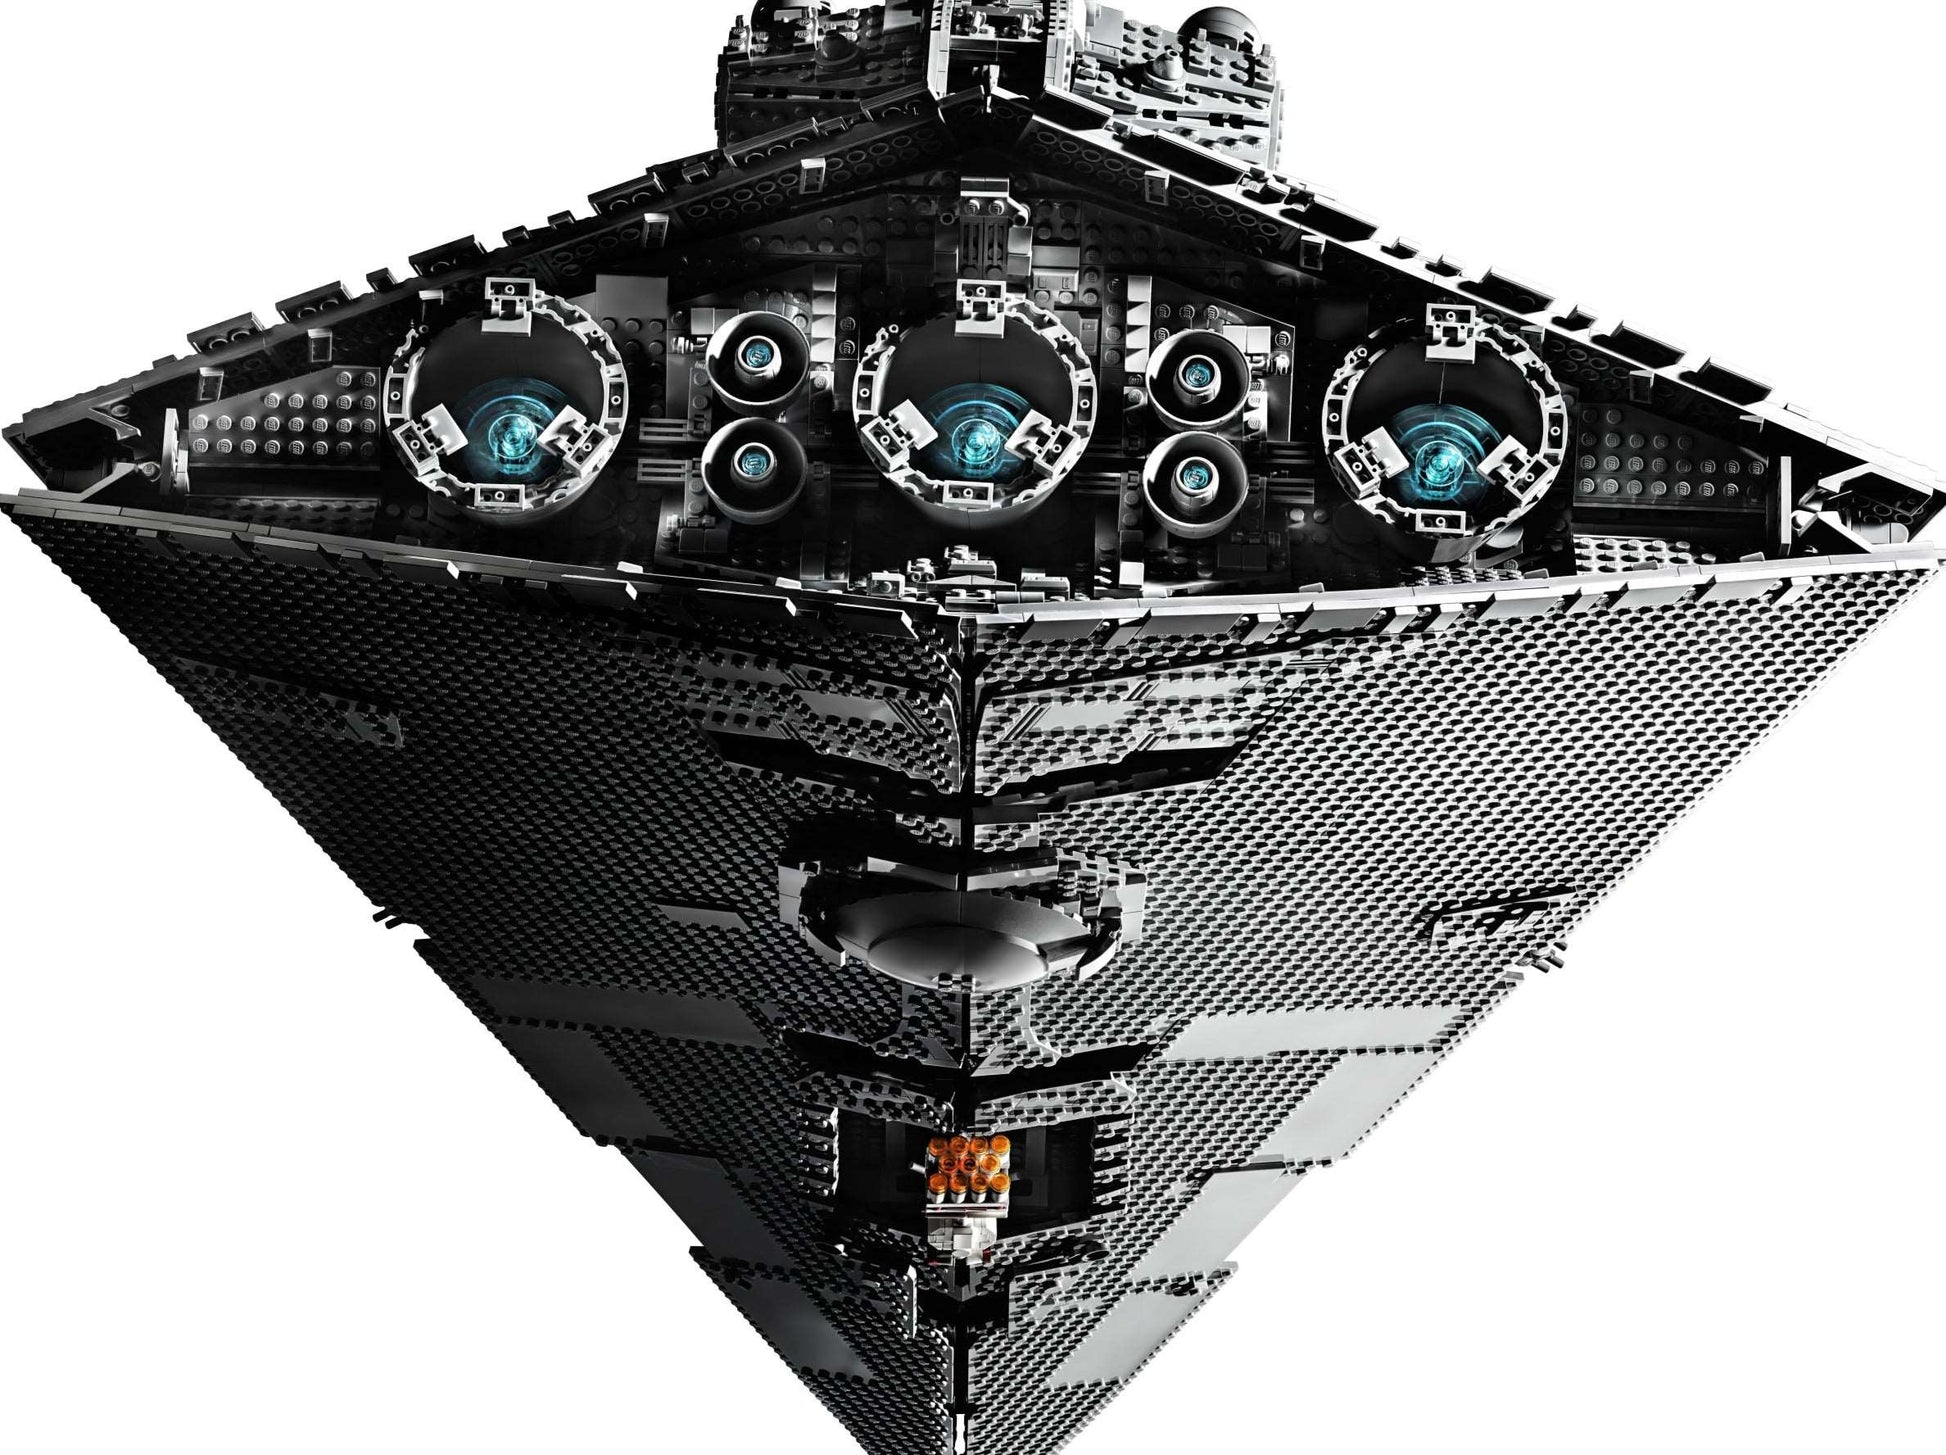 75252 : Imperial Star Destroyer - Brickset for You Huur Lego Kortrijk (West-Vlaanderen)